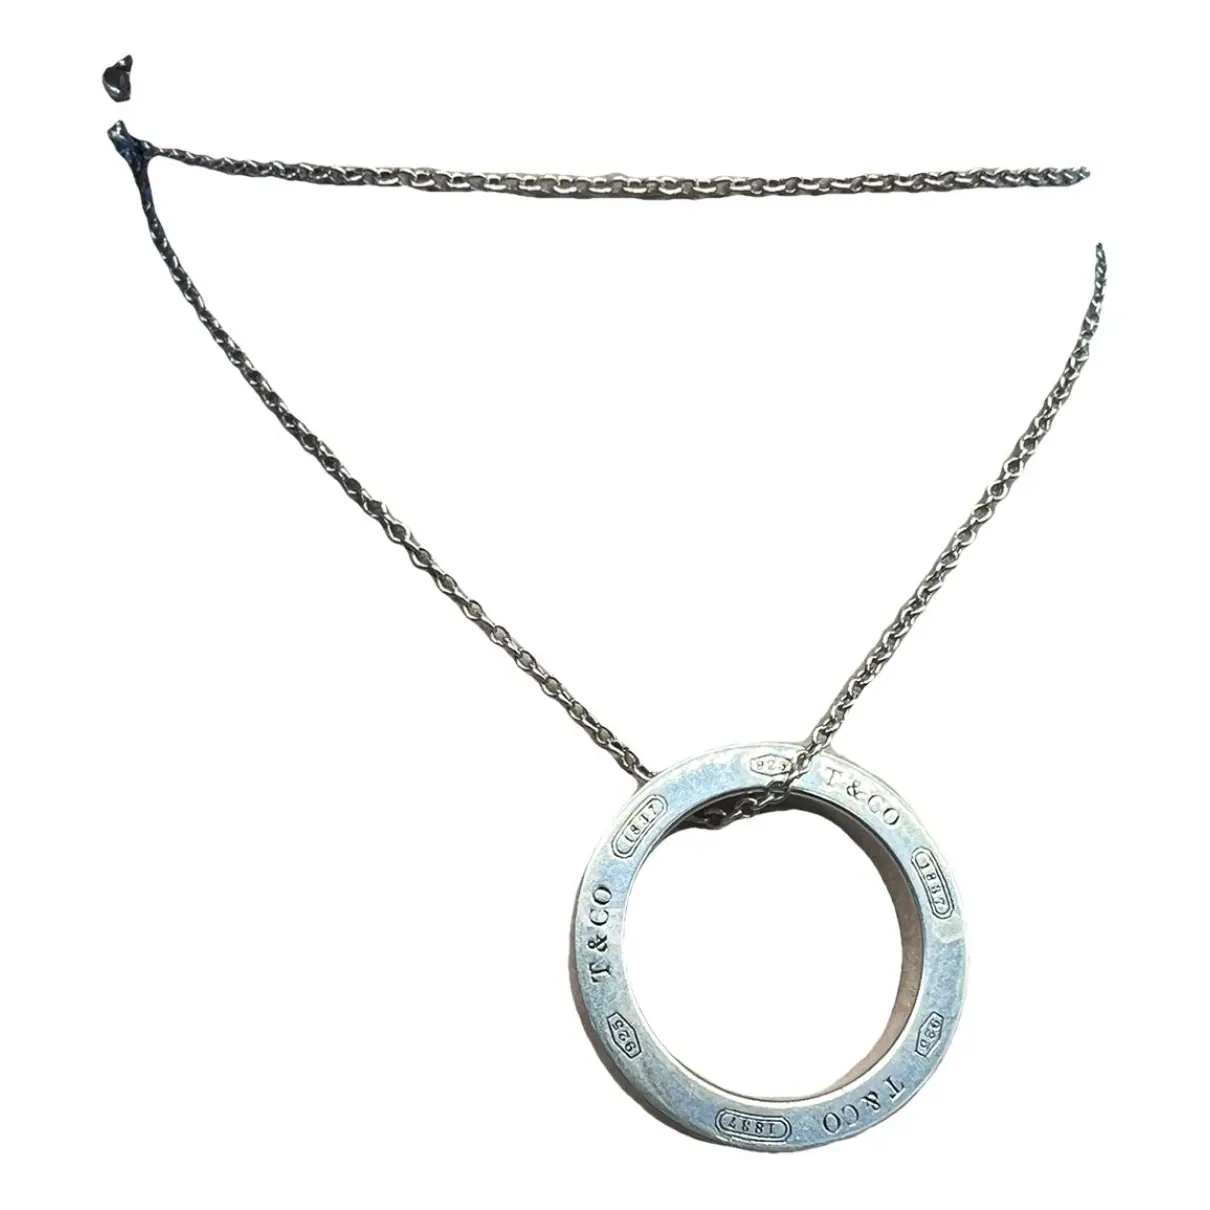 Tiffany 1837 silver necklace